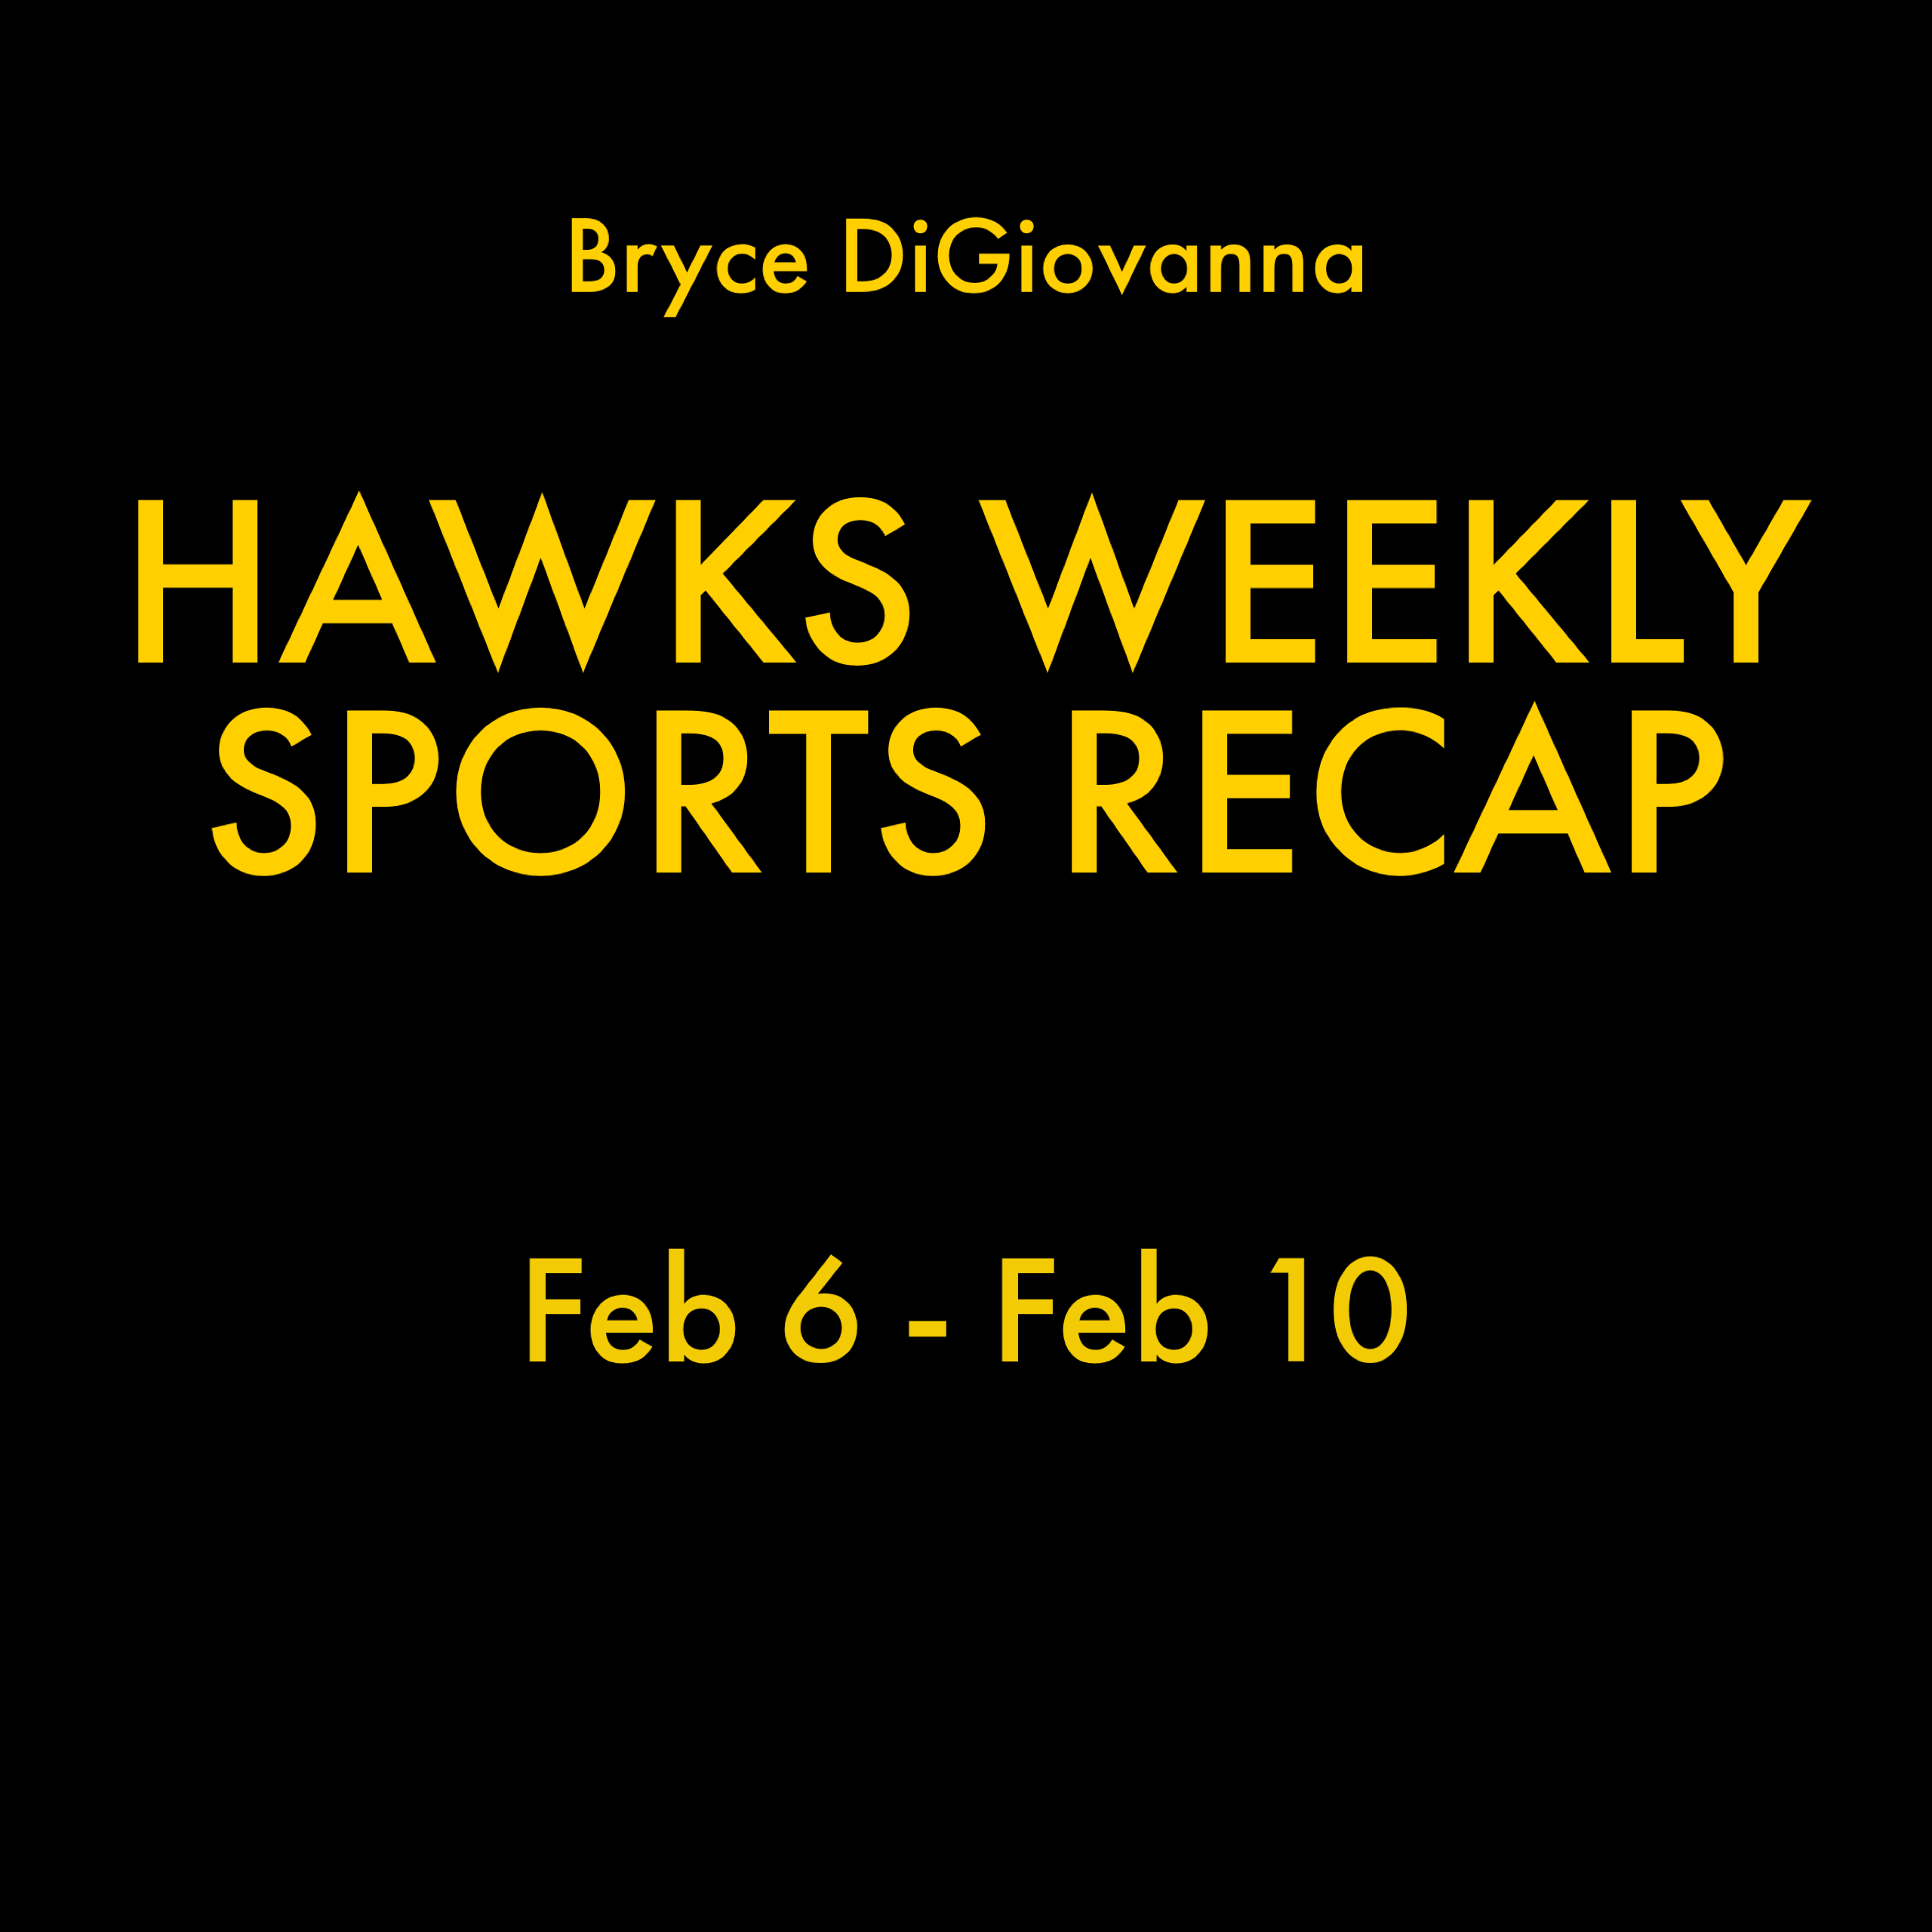 Hawks Weekly Sports Recap 2/6-2/10